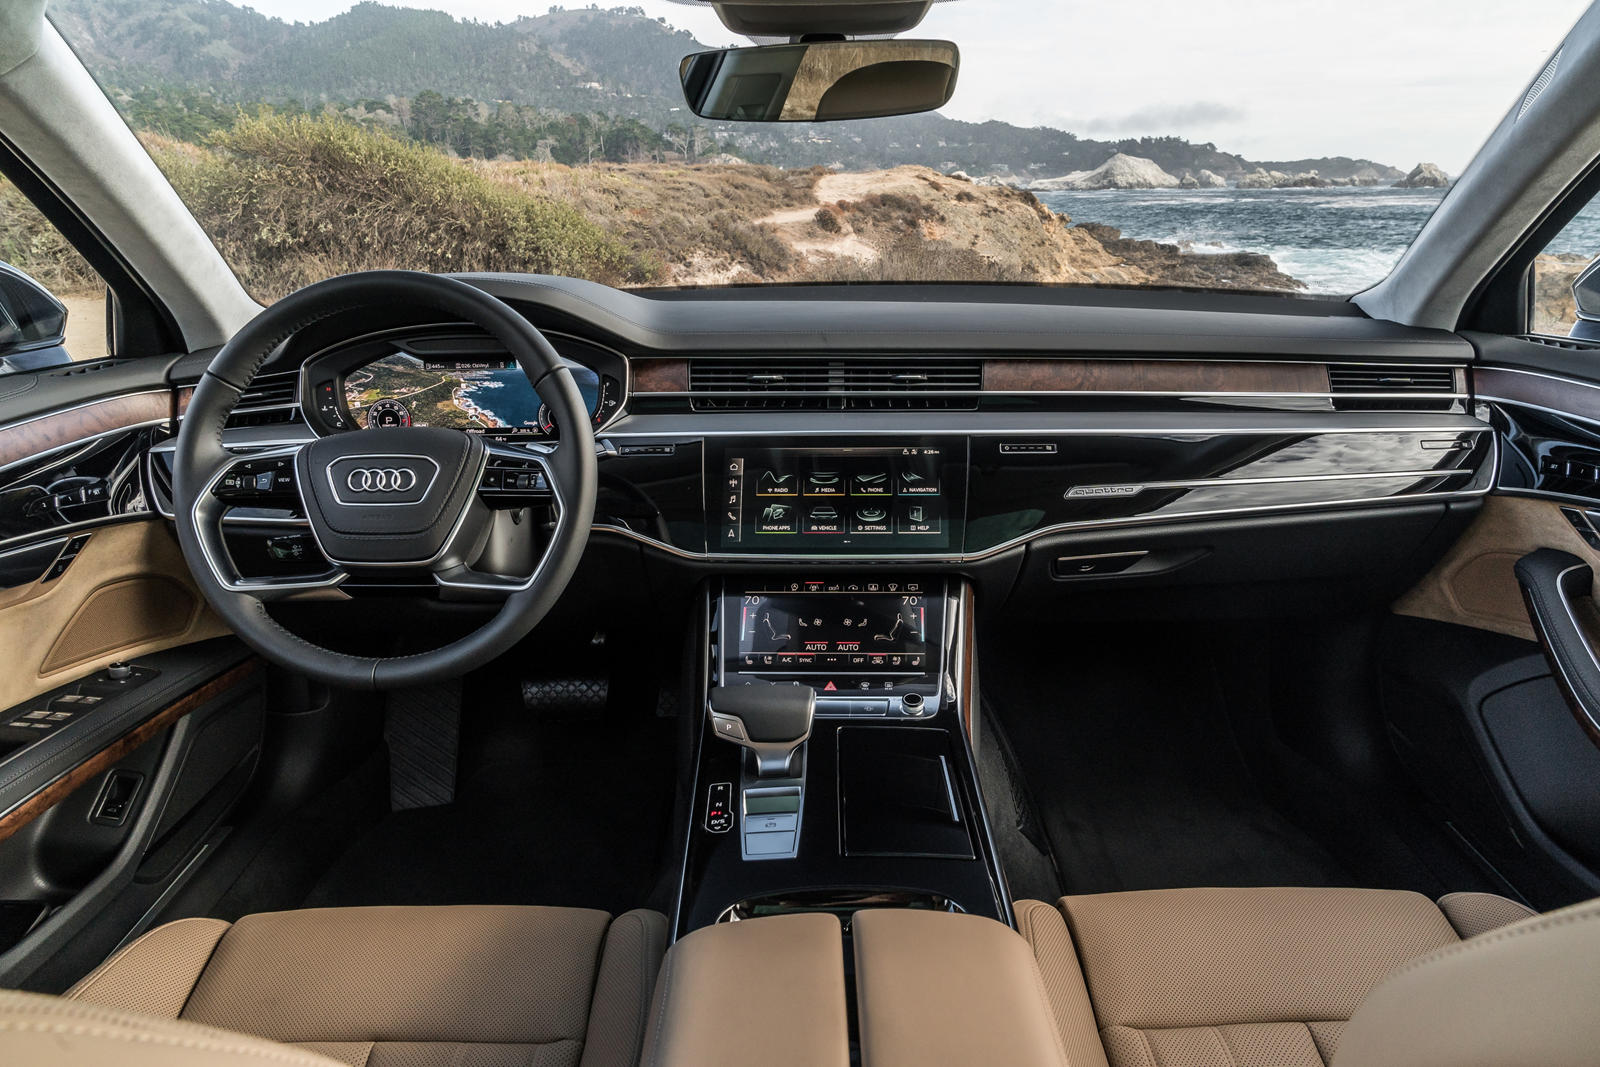 Interior of Audi A8